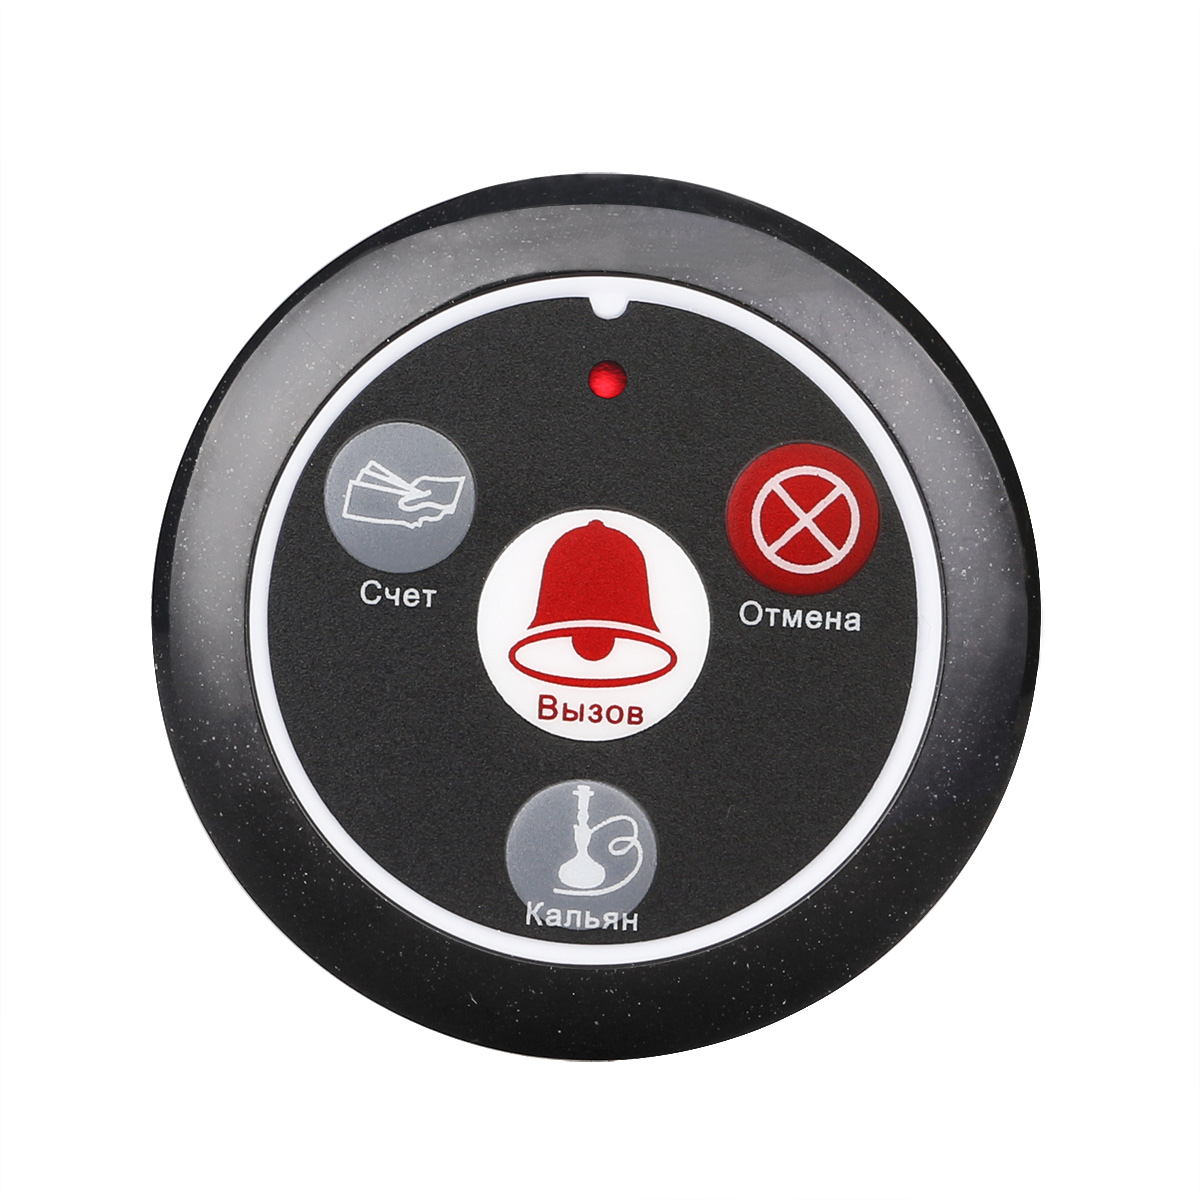 Кнопка вызова персонала Retekess R22117H для клиентов ресторана, кафе, фастфуда кнопка вызова персонала универсальная retekess r22901w защита от влаги ip02 и индикация